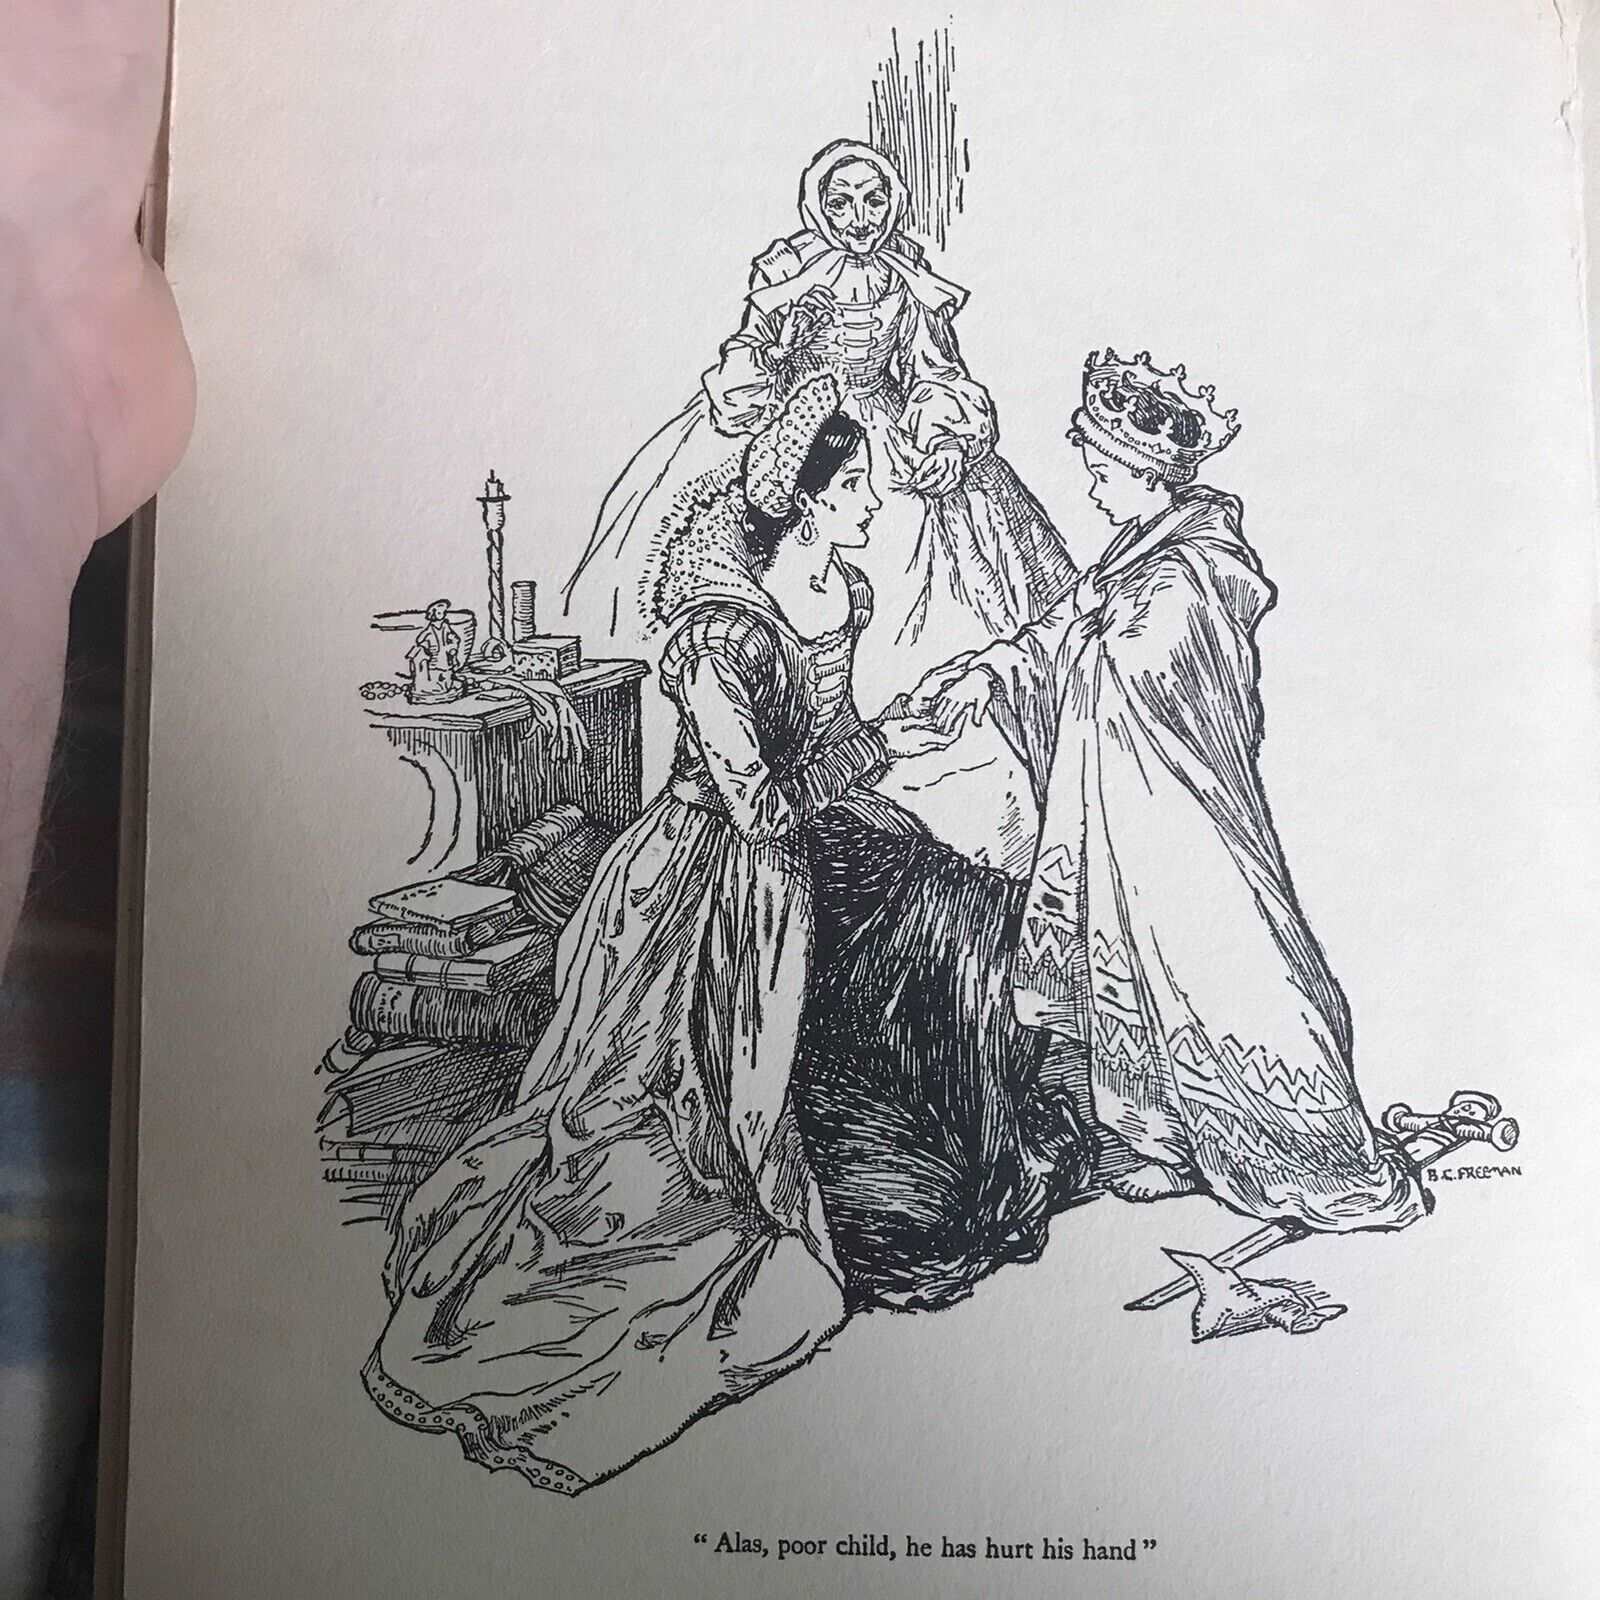 1933 Blackie’s Children’s Annual(Cicely Mary Barker, HM Brock, Harry Rountree Et Honeyburn Books (UK)